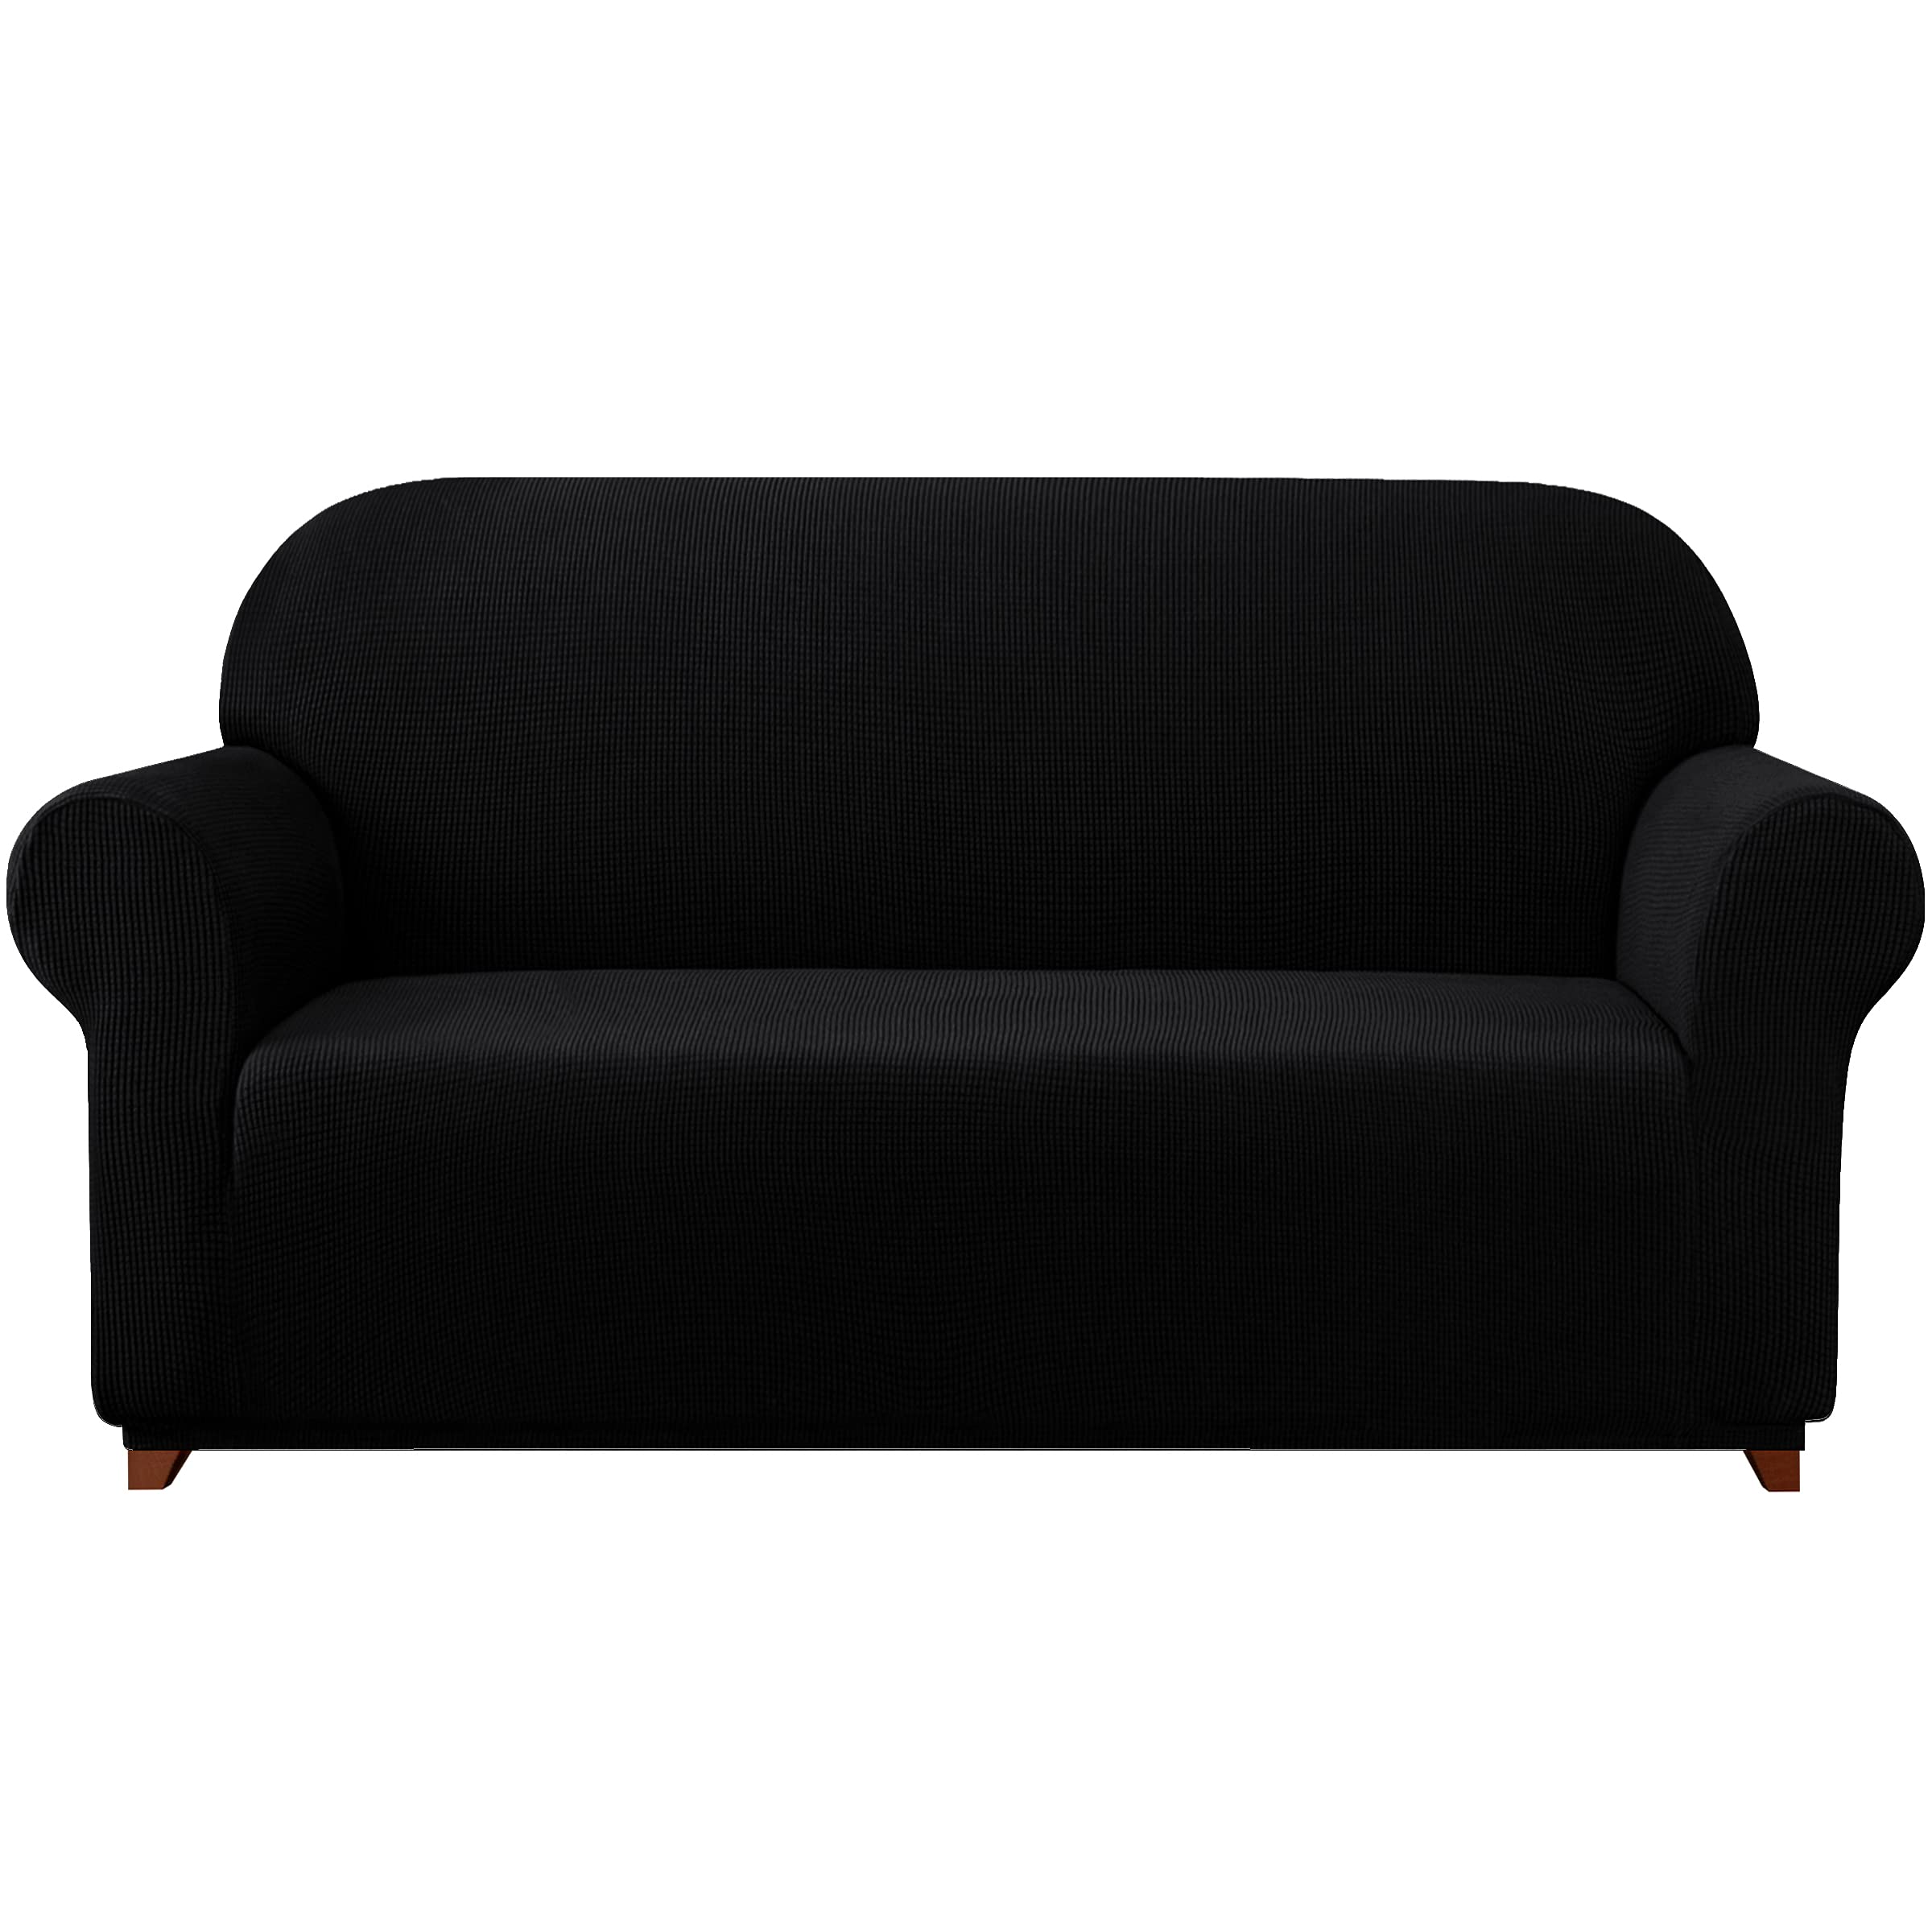 Subrtex Sofa 1-Piece Stretch Slipcover Soft couch Washable Furniture covers Jacquard Fabric Small checks(Black,X-Large), XL Sofa